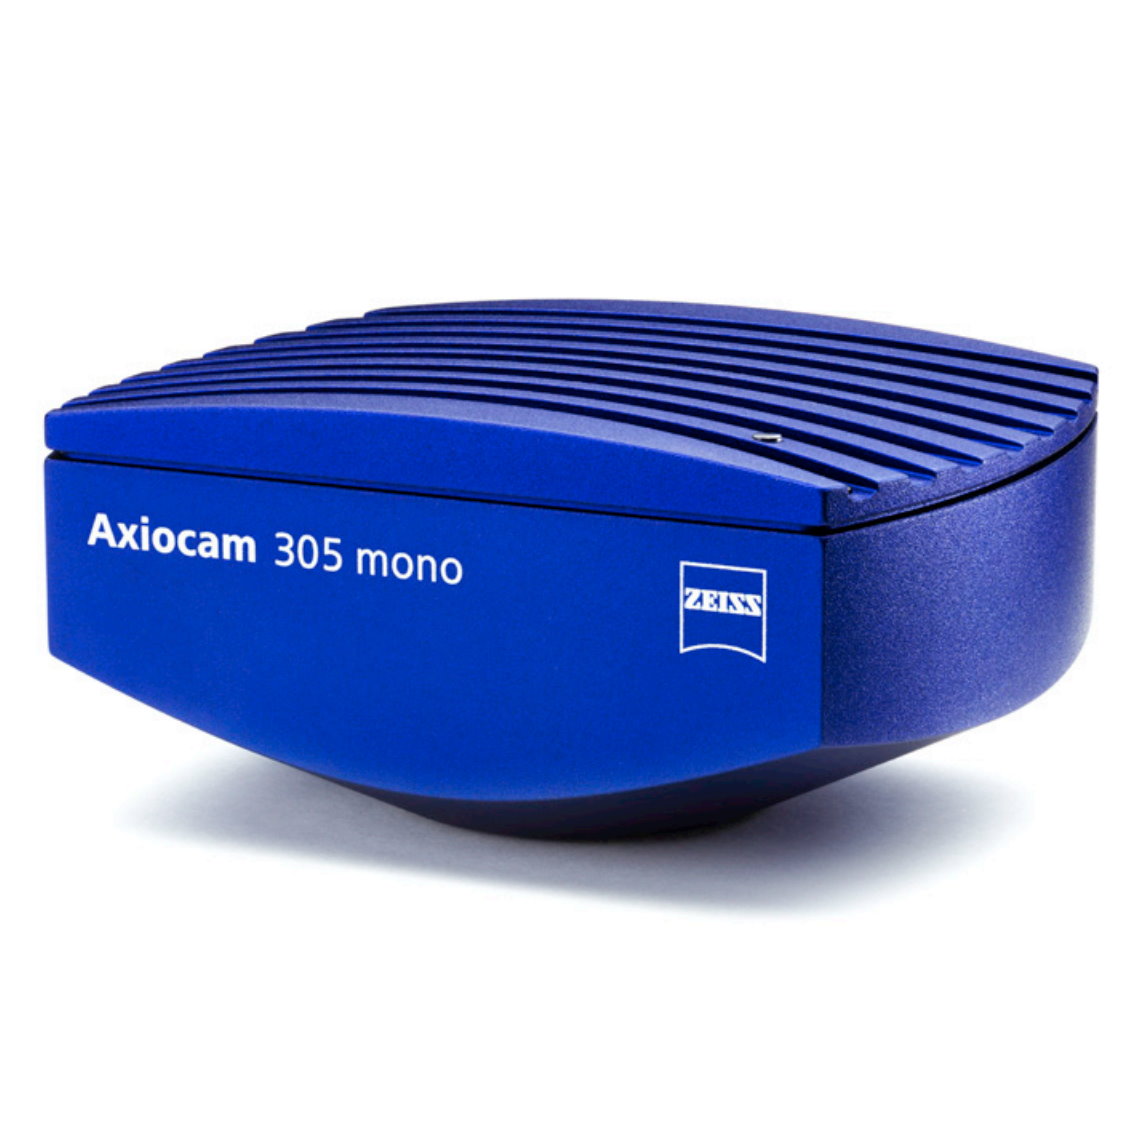 Microscopy Camera Axiocam 305 mono (D)